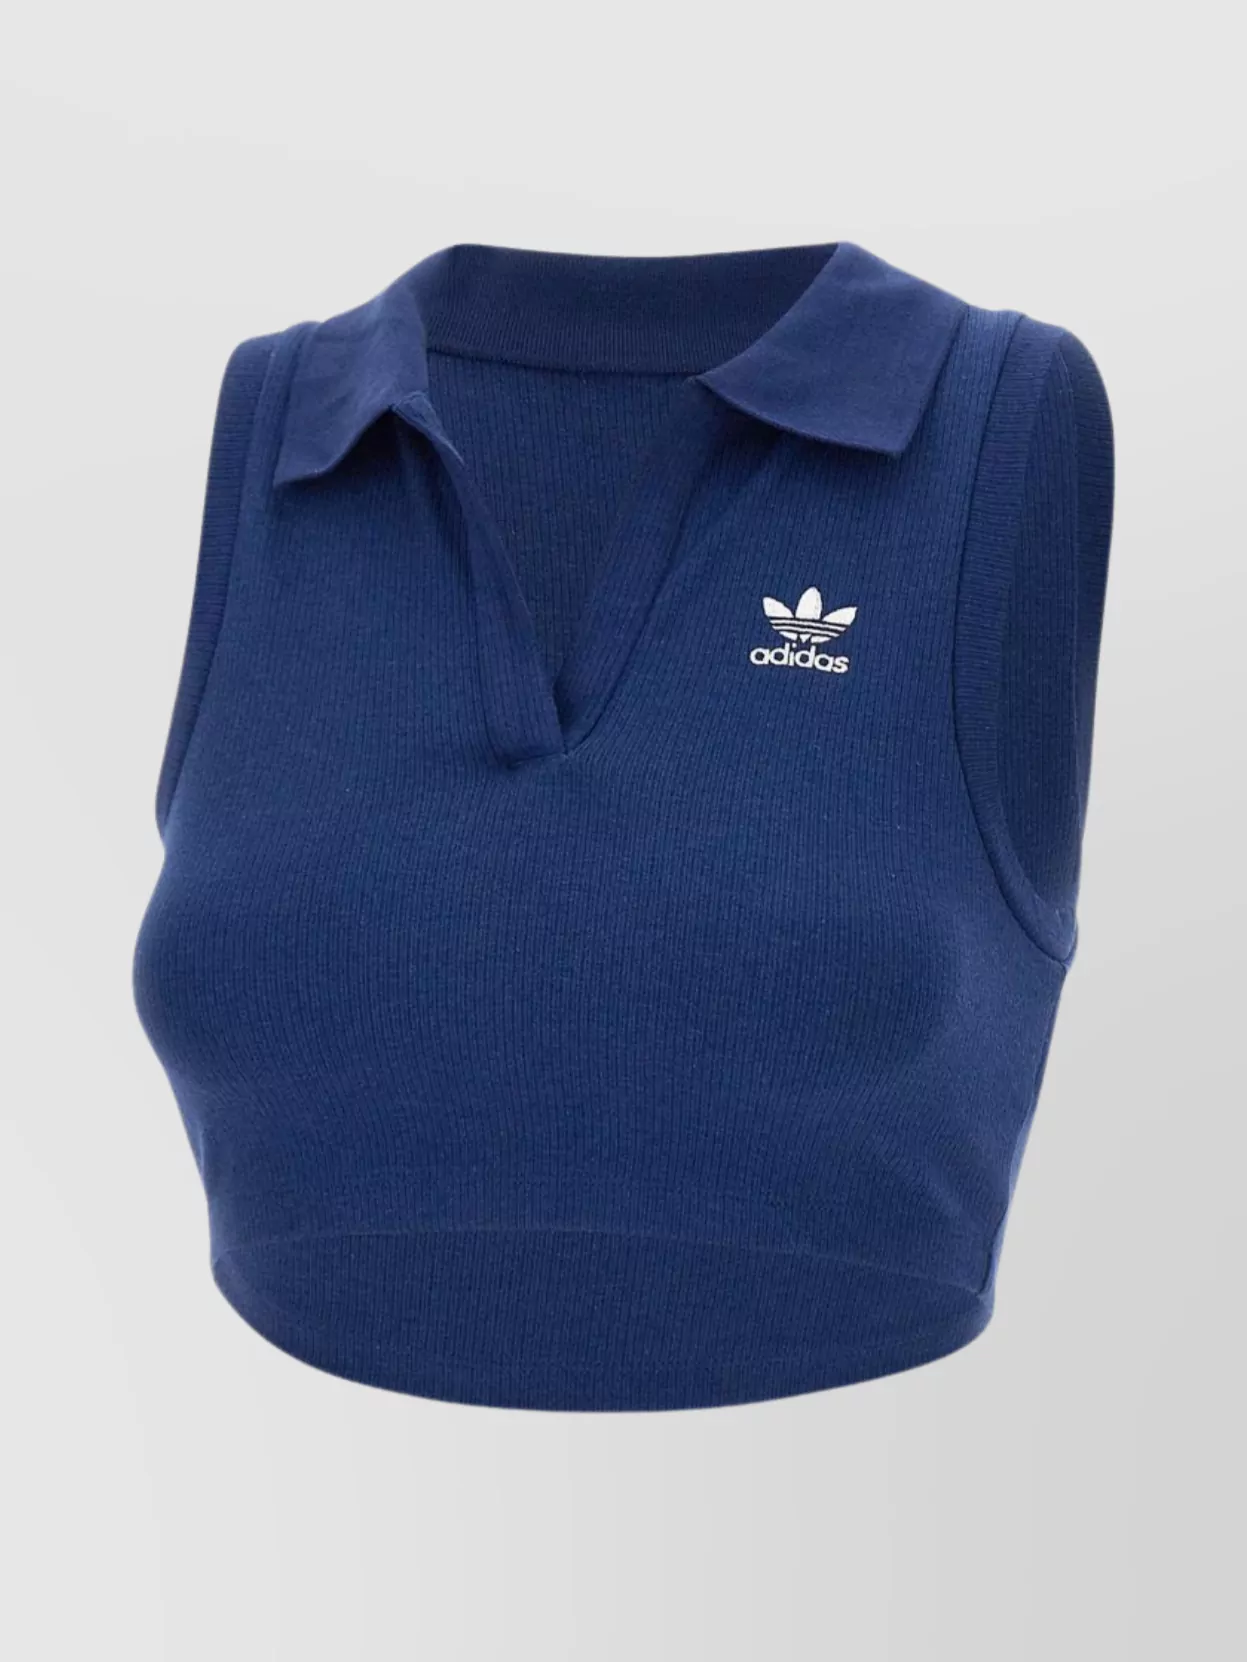 Adidas Originals Cotton And Viscose Top In Blue